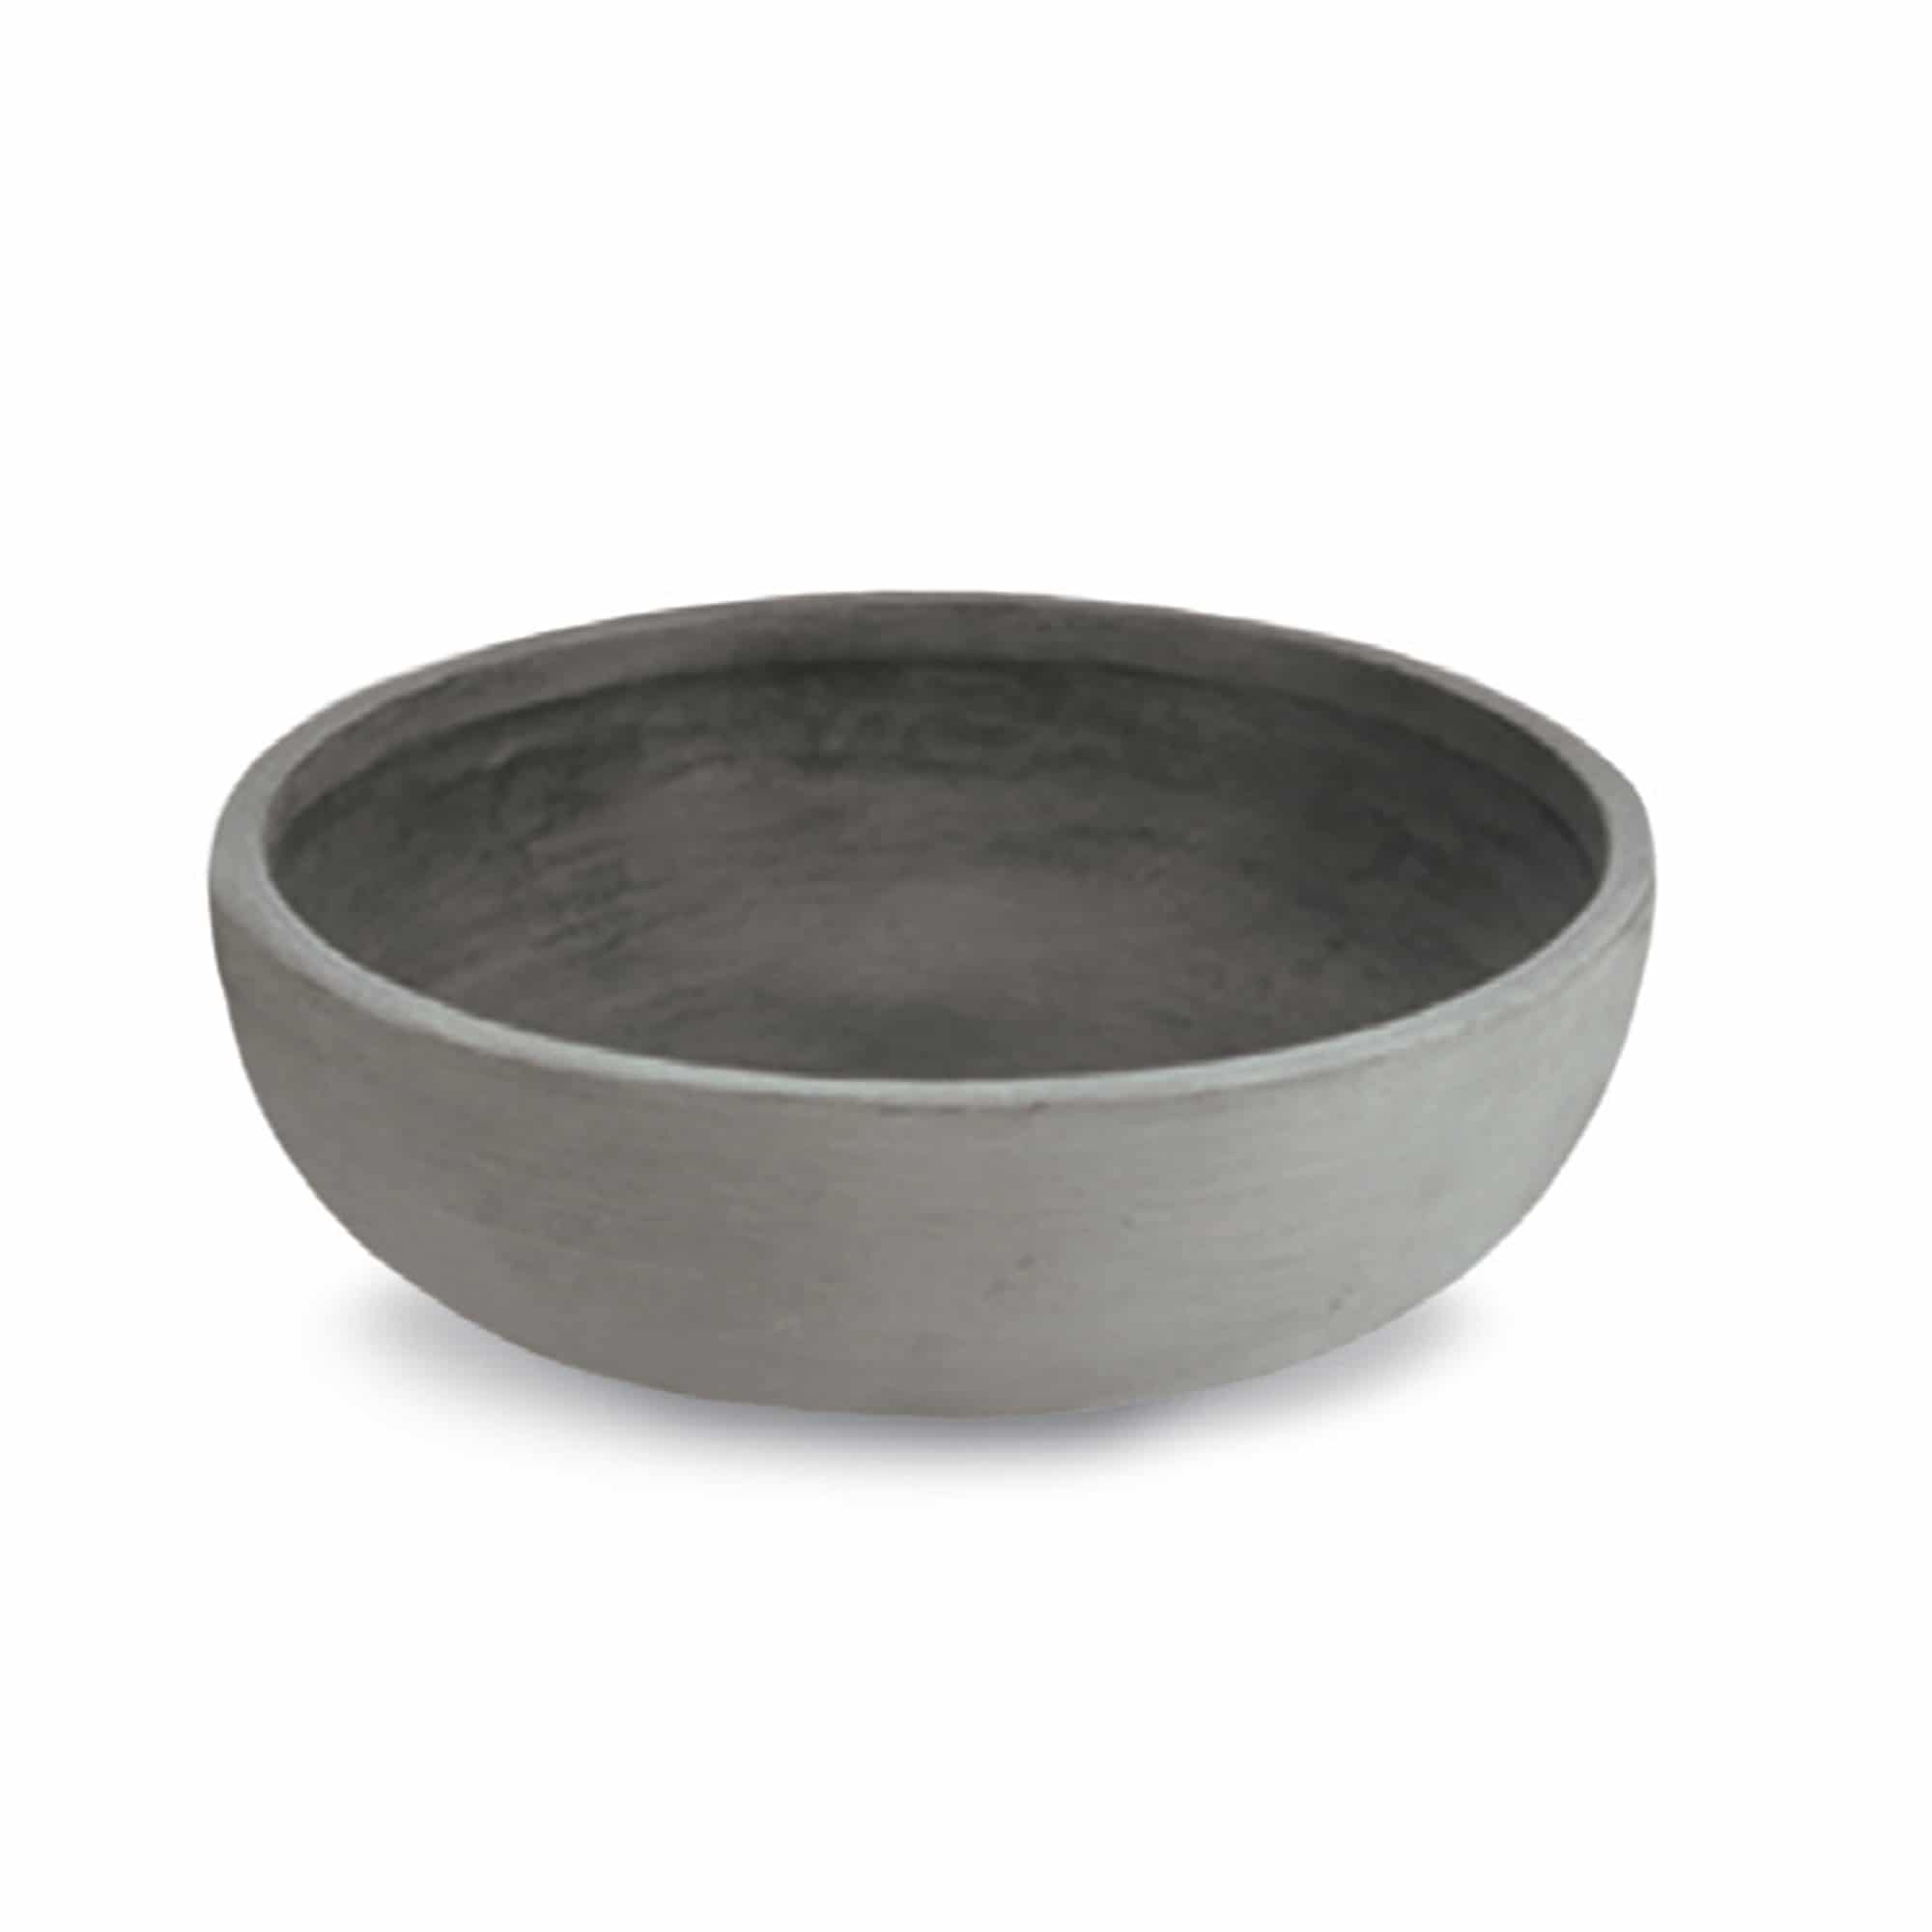 Orinoco Bowl Weathered in Concrete Grey